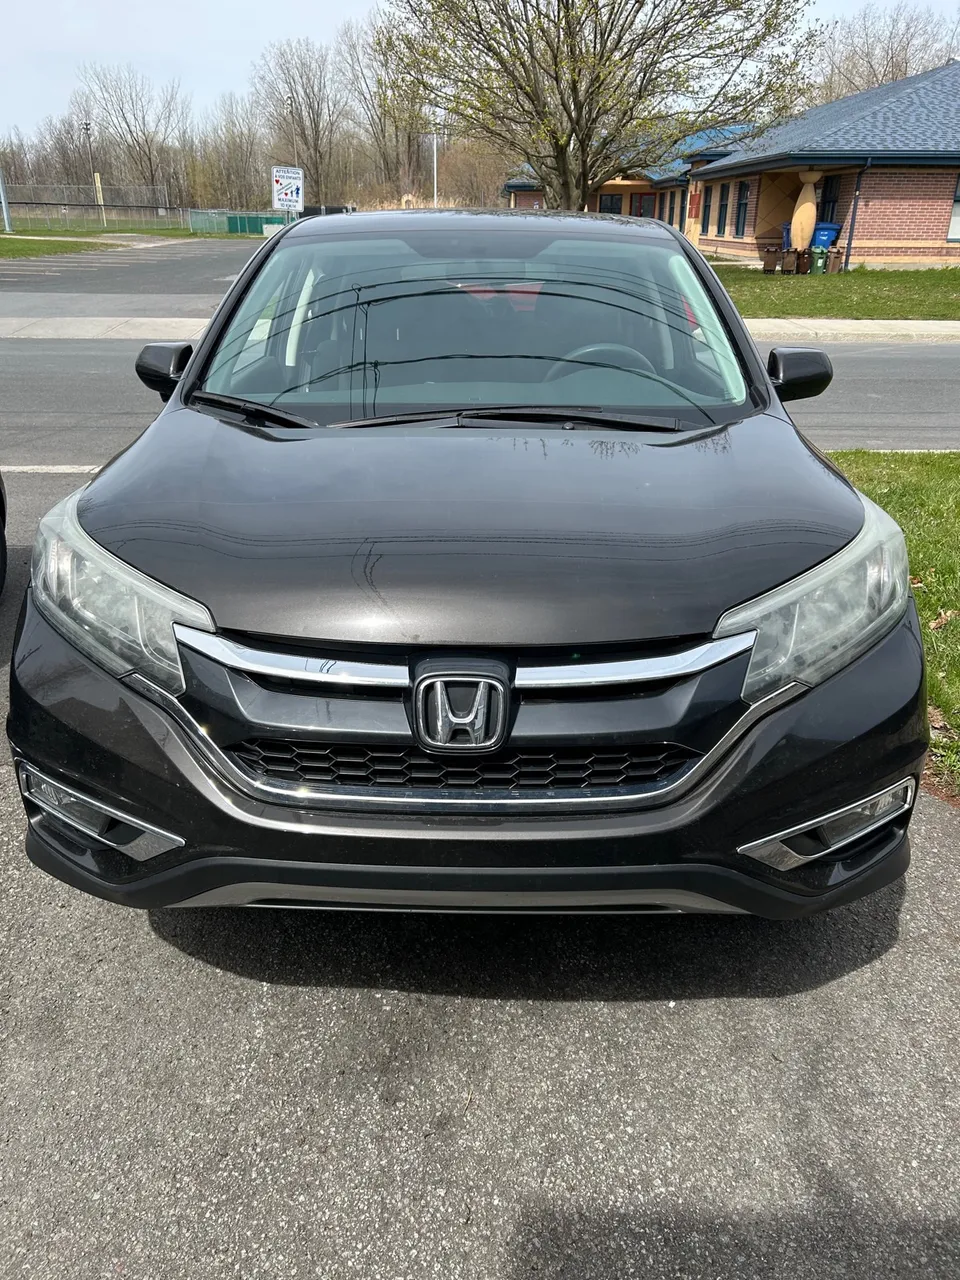 Honda CRV 2016 full equipped